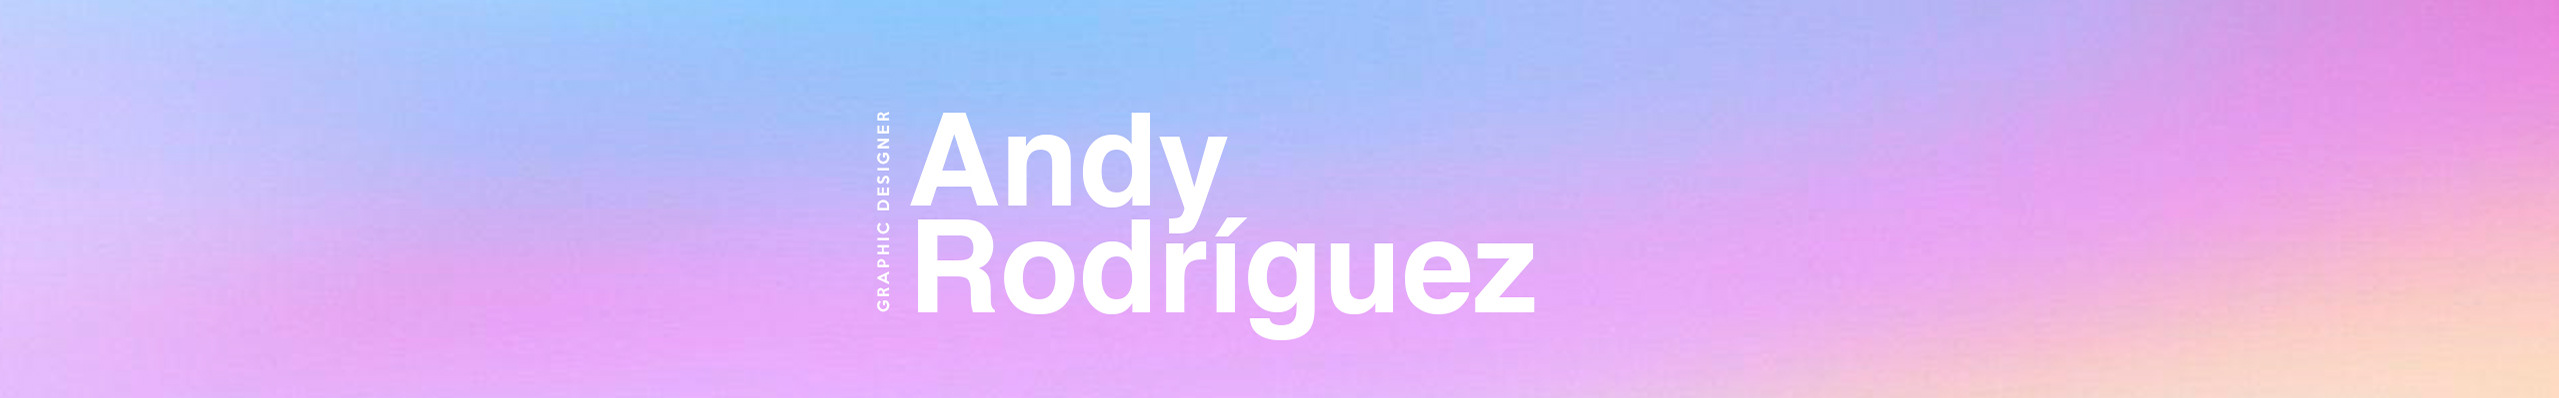 Andy Rodríguez's profile banner